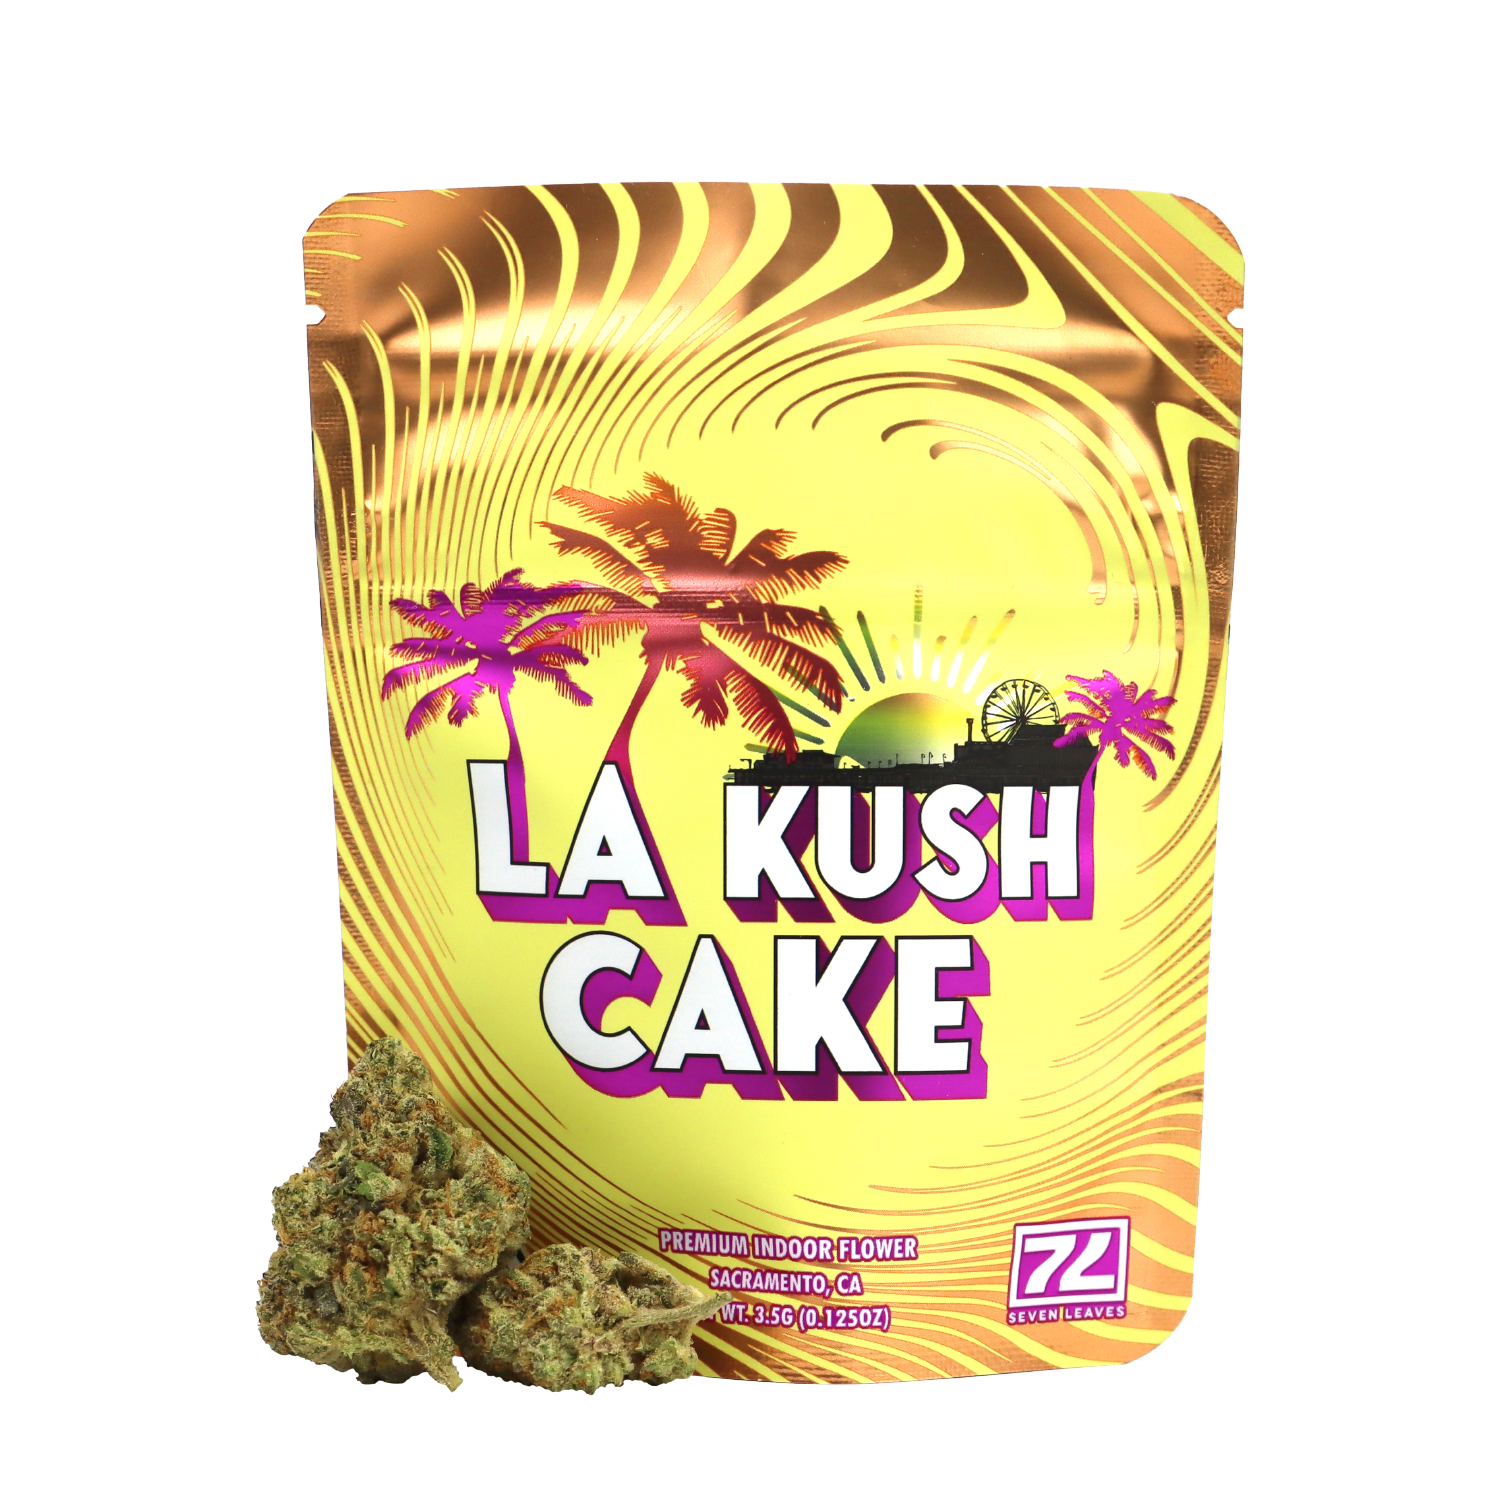 LA KUSH CAKE